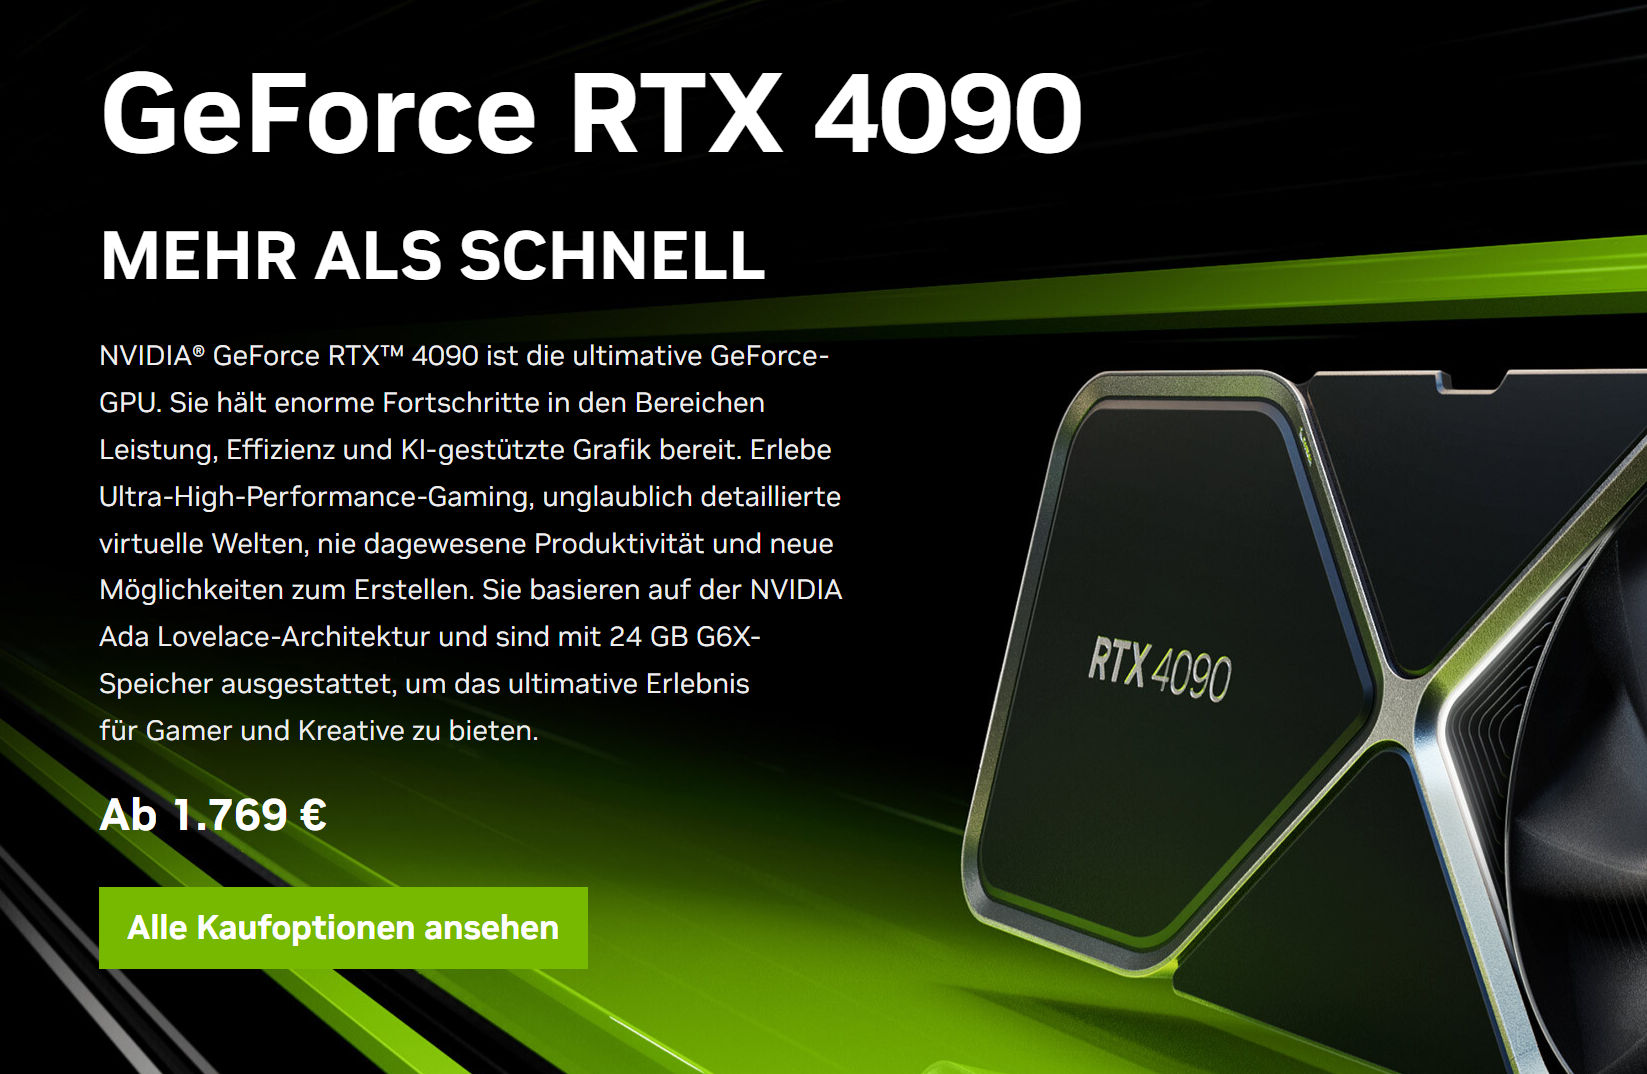 GeForce RTX 4090 FE Model Price